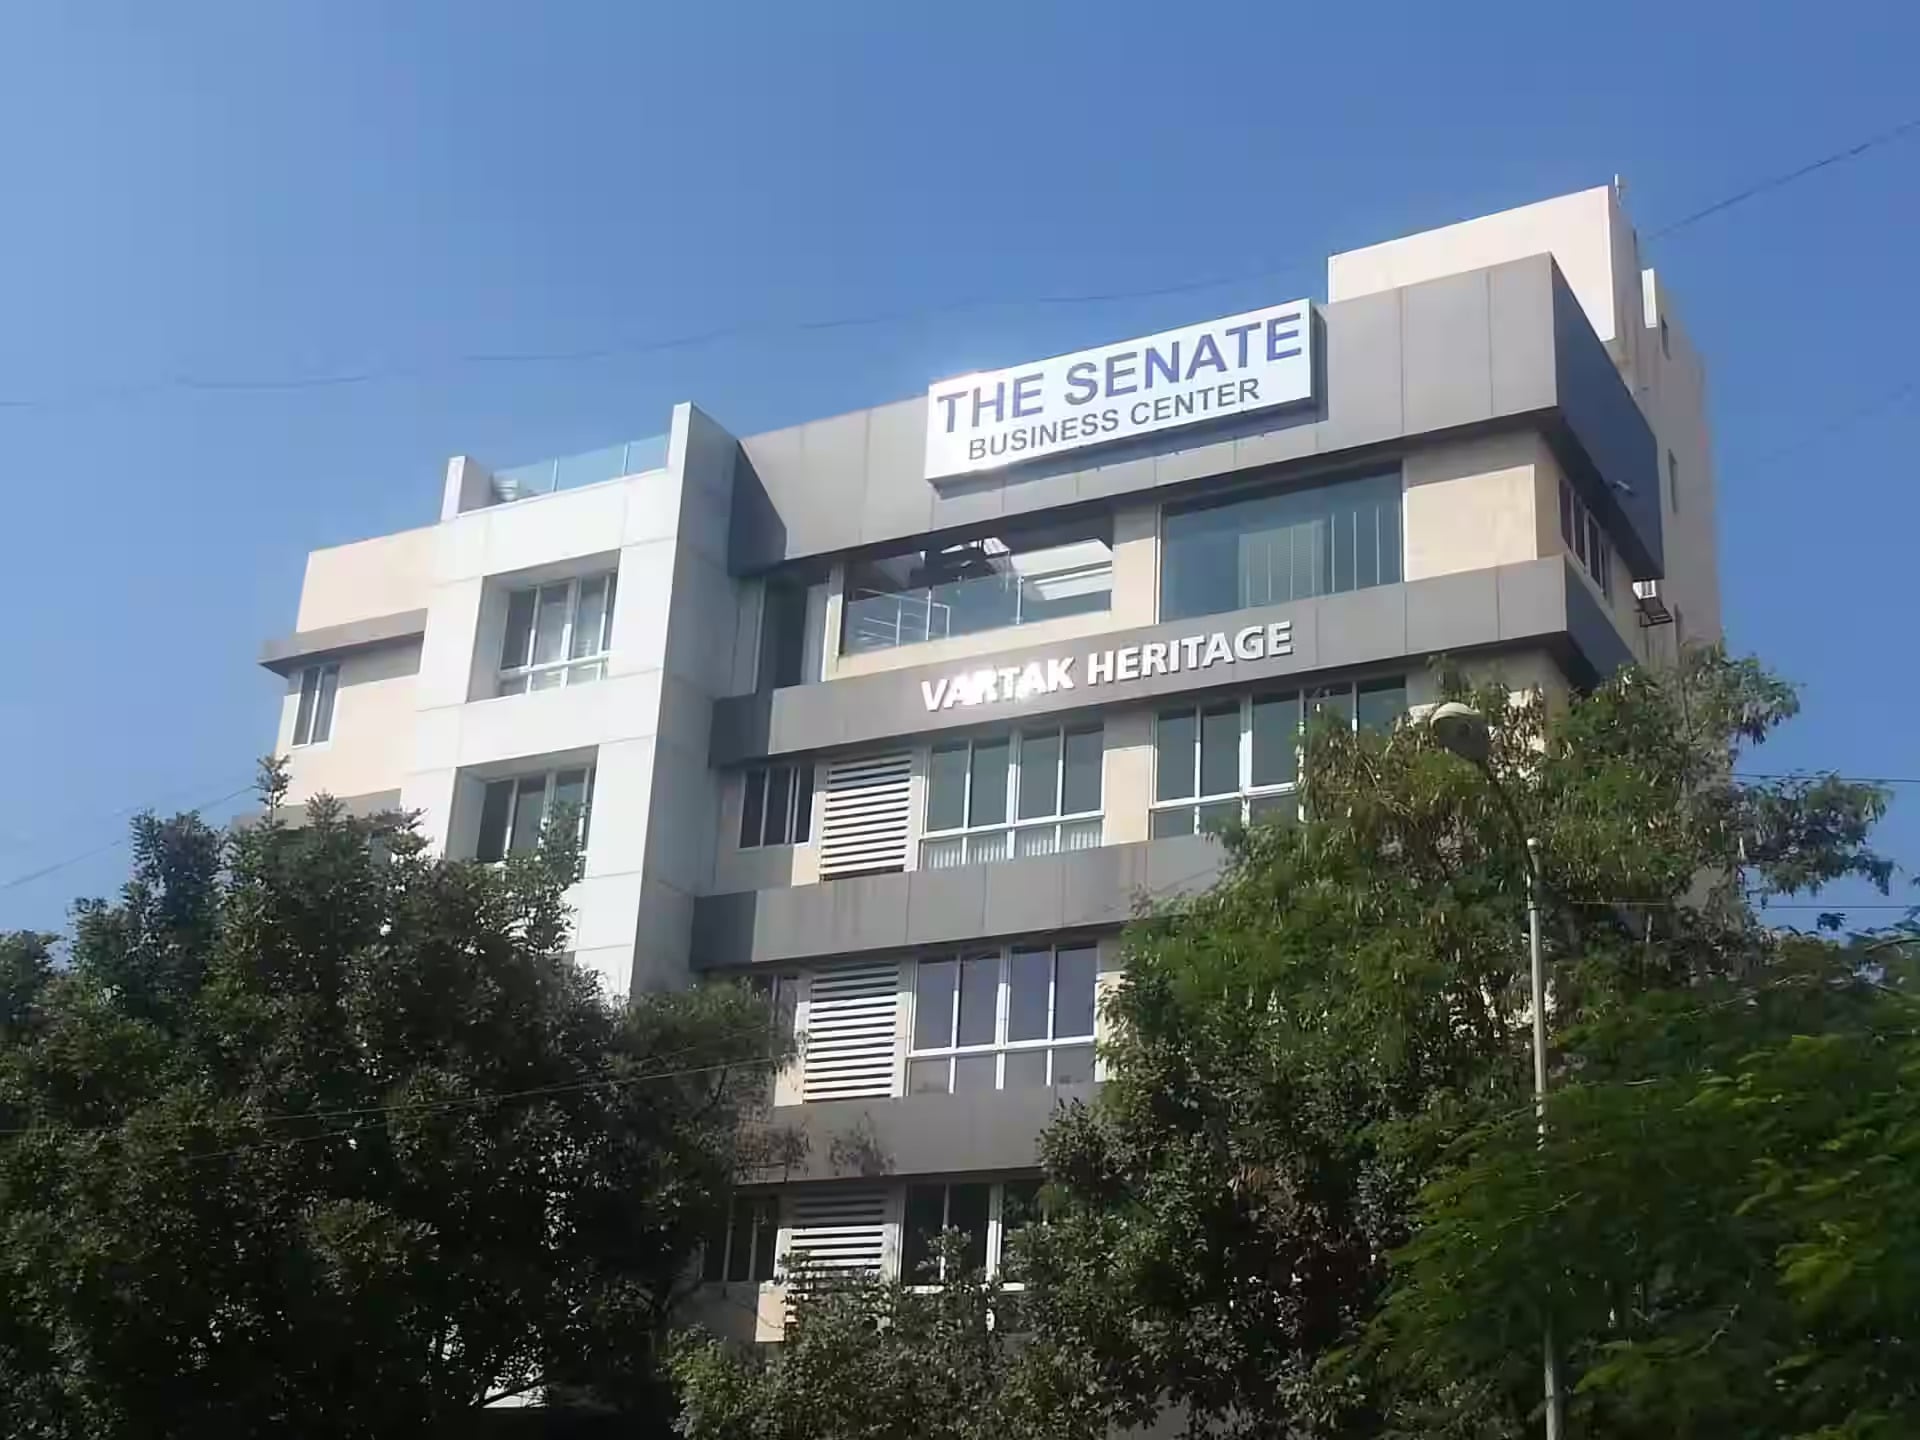 The Senate Business Center